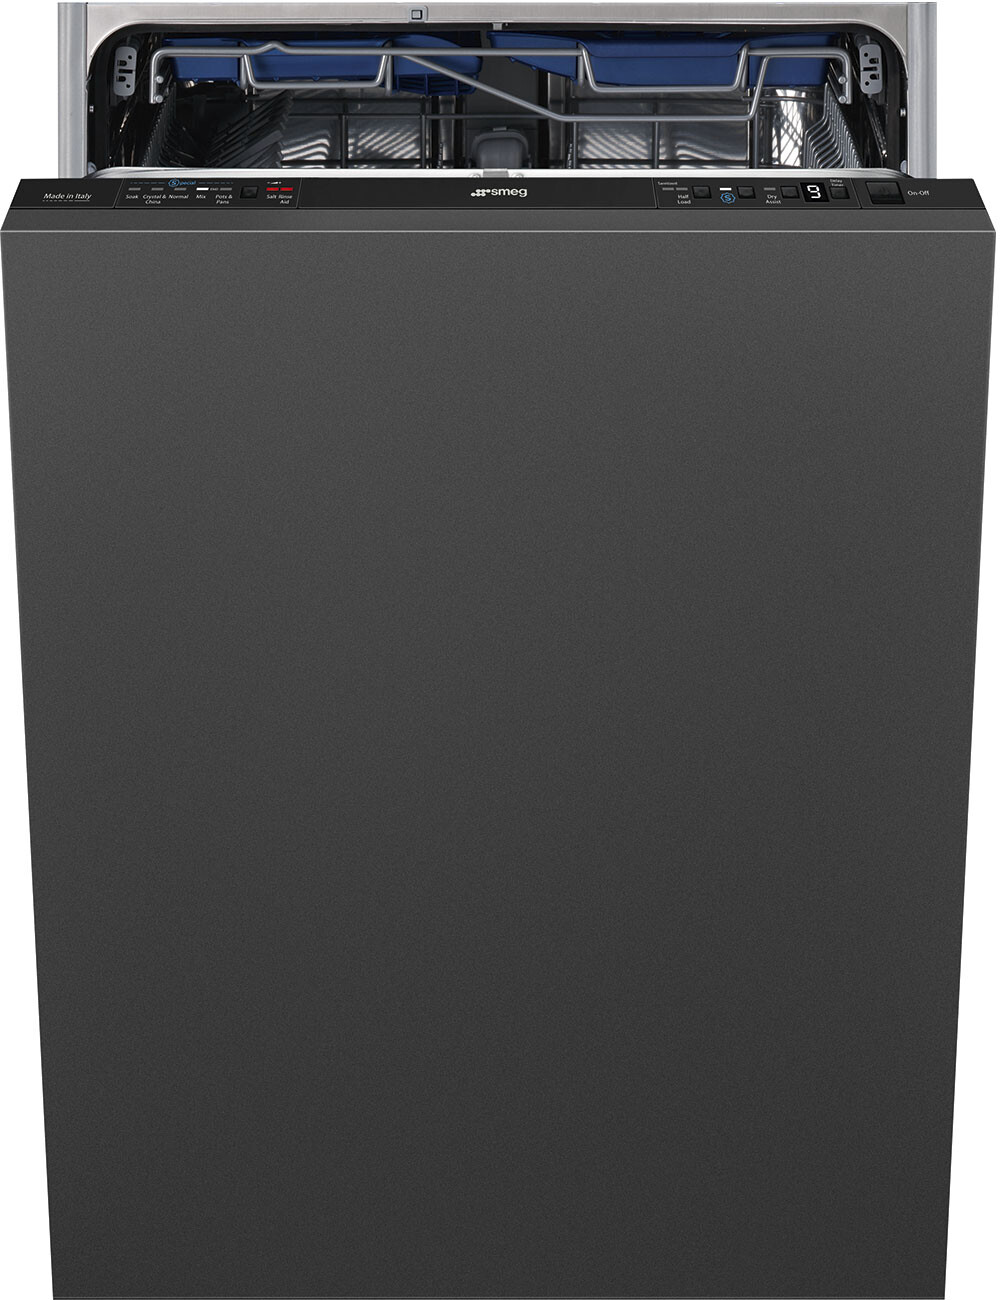 Smeg Classic Design 24 Fully Integrated Built In Dishwasher STU8623